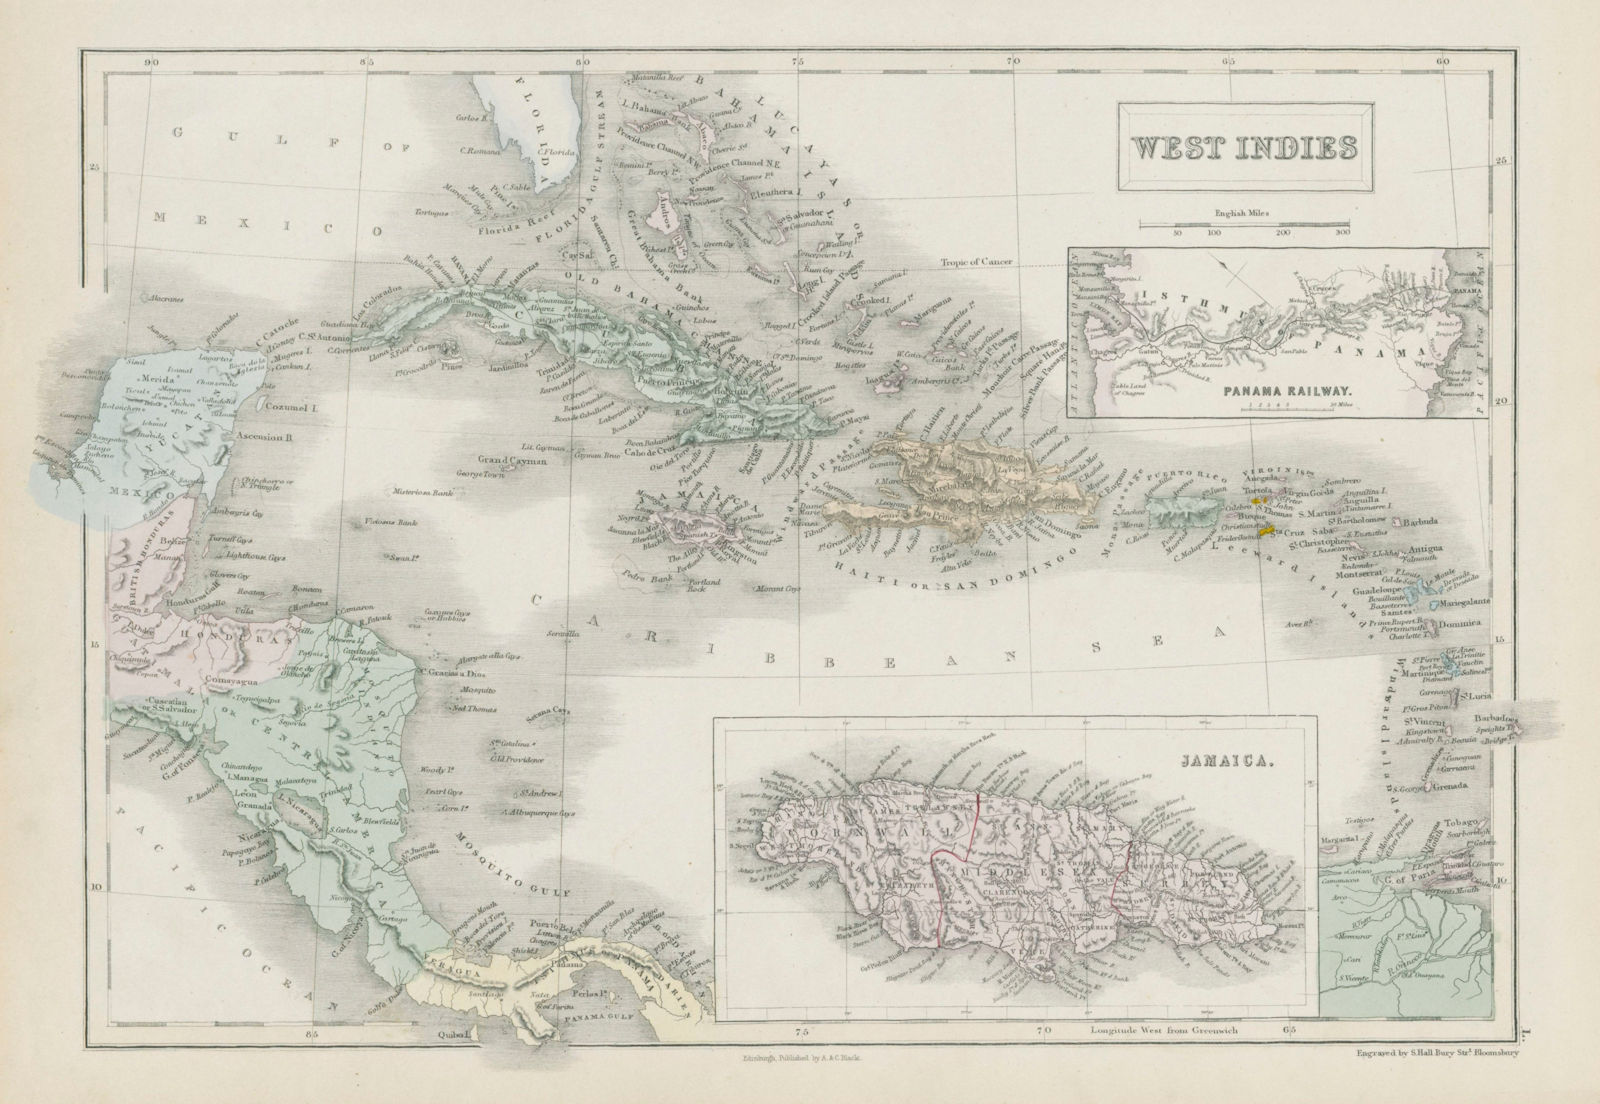 West Indies. Inset Panama Railway & Jamaica. Caribbean. SIDNEY HALL 1856 map